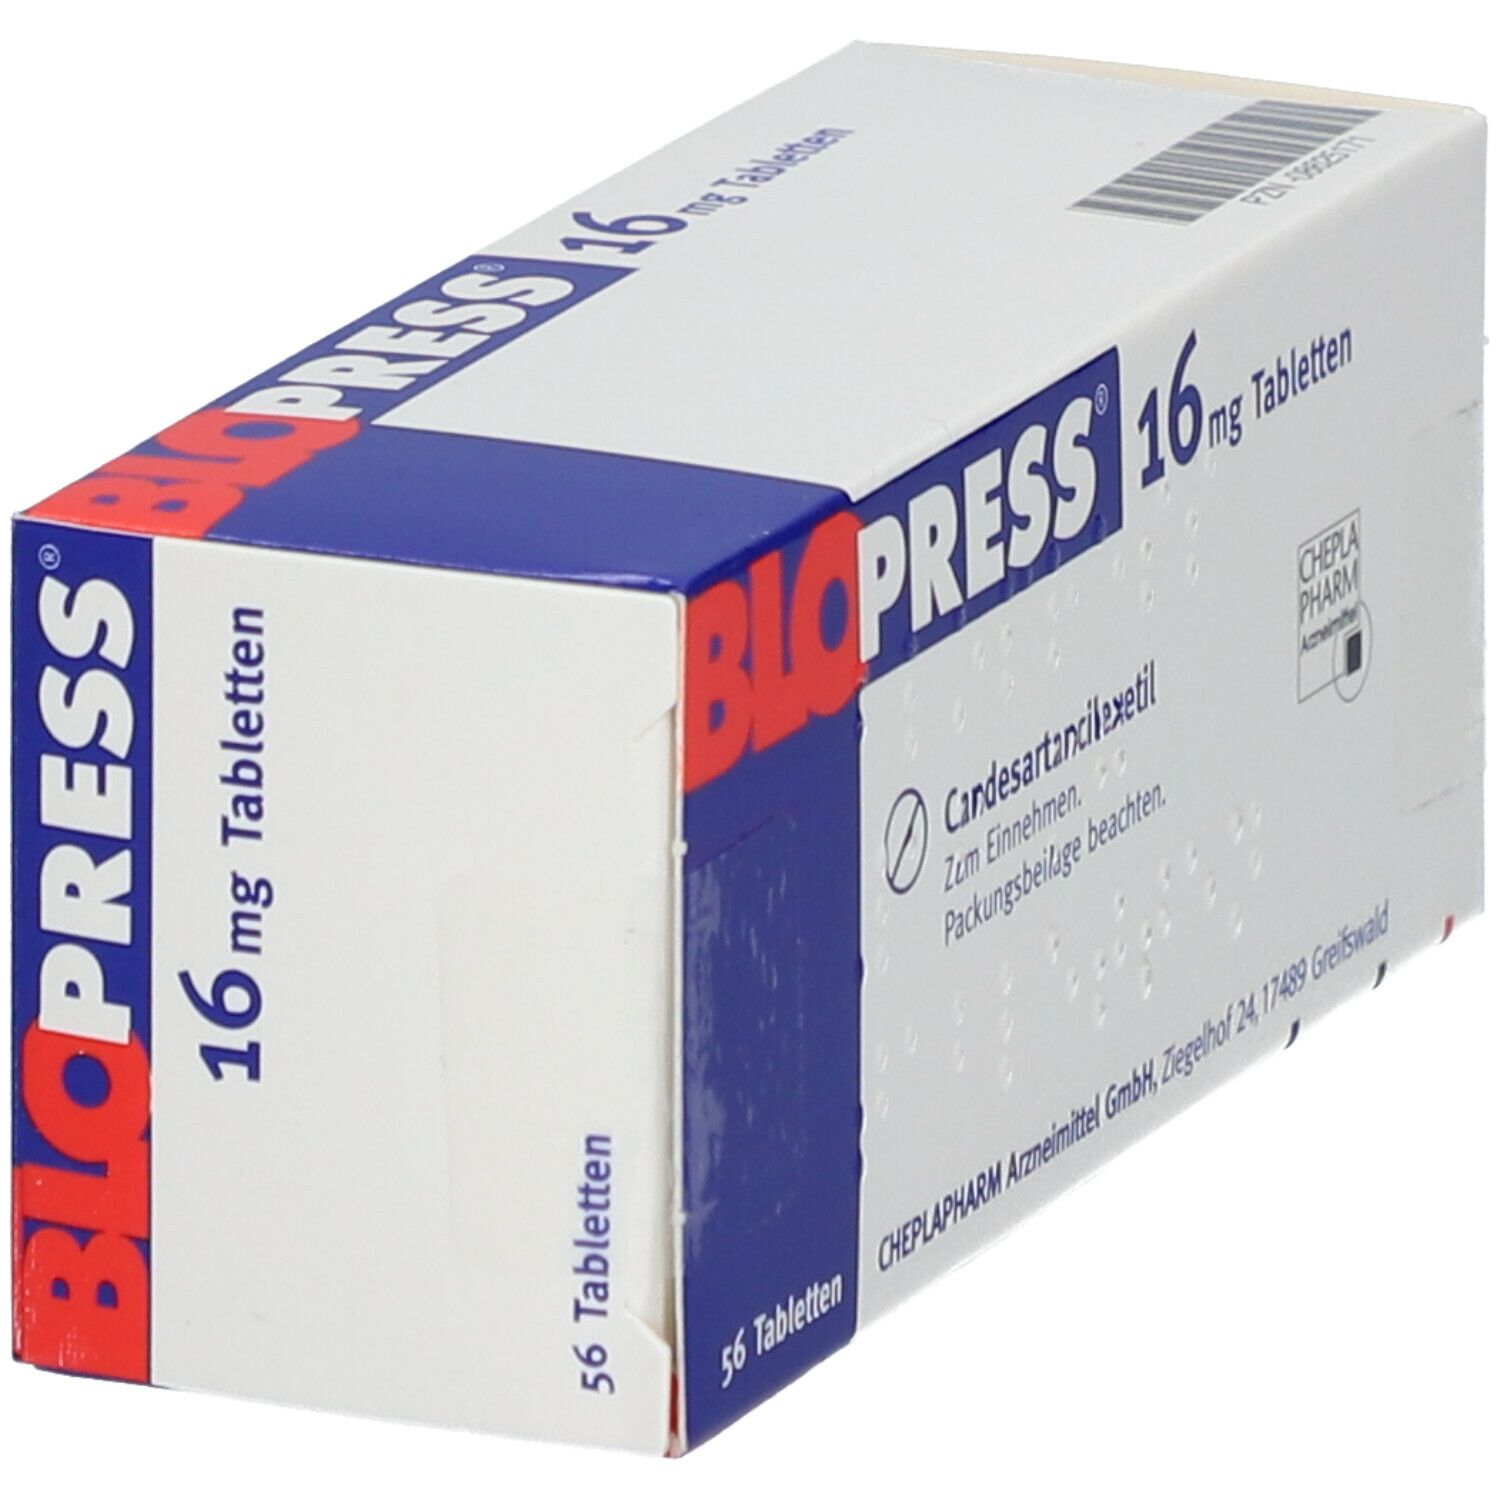 Blopress® 16 mg